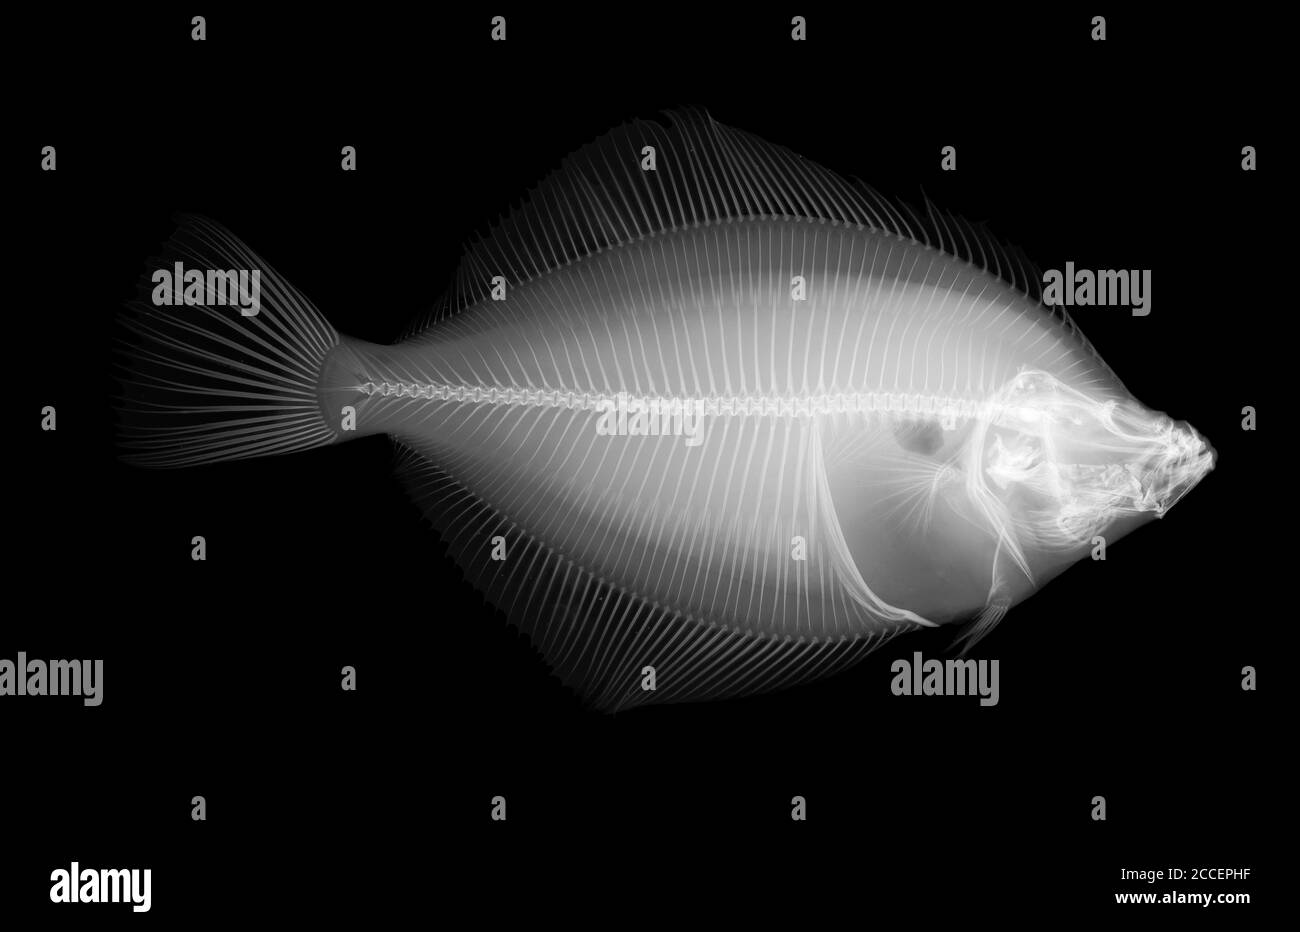 Platija de pescado, rayos X. Foto de stock